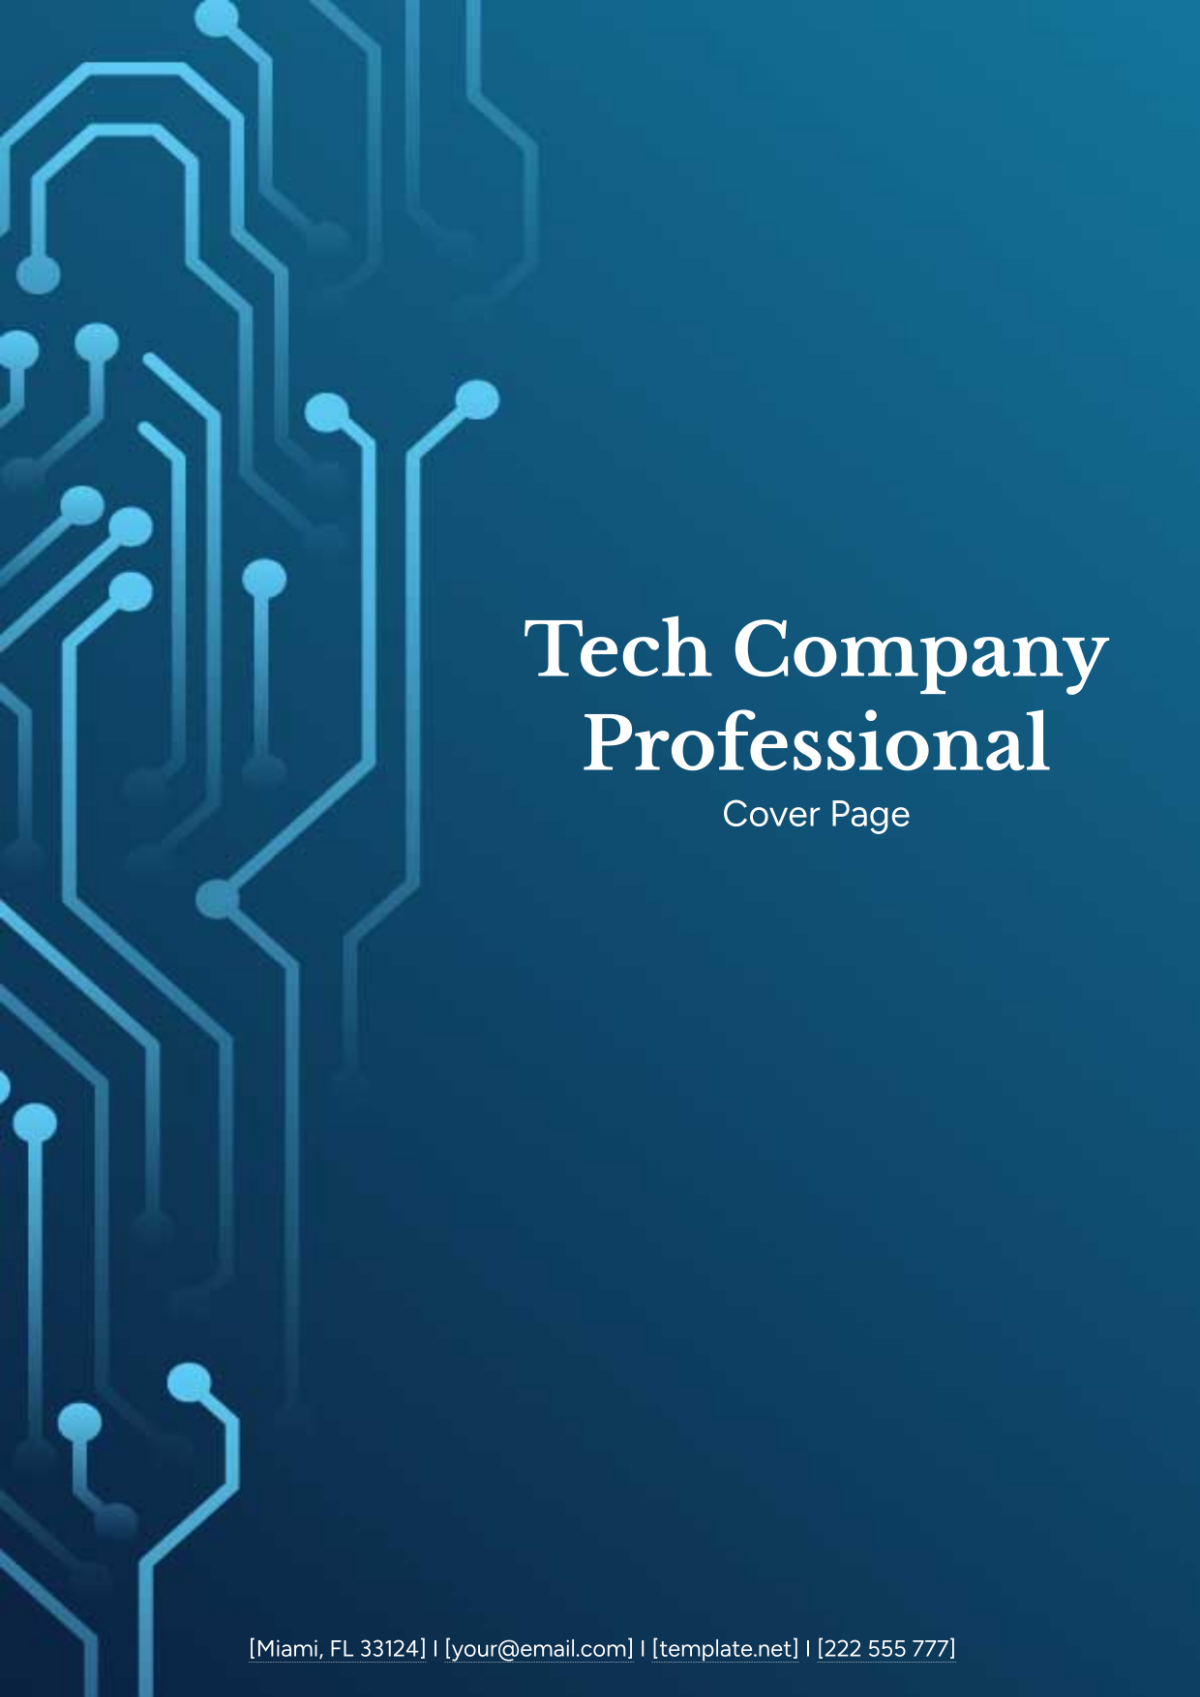 Tech Company Professional Cover Page